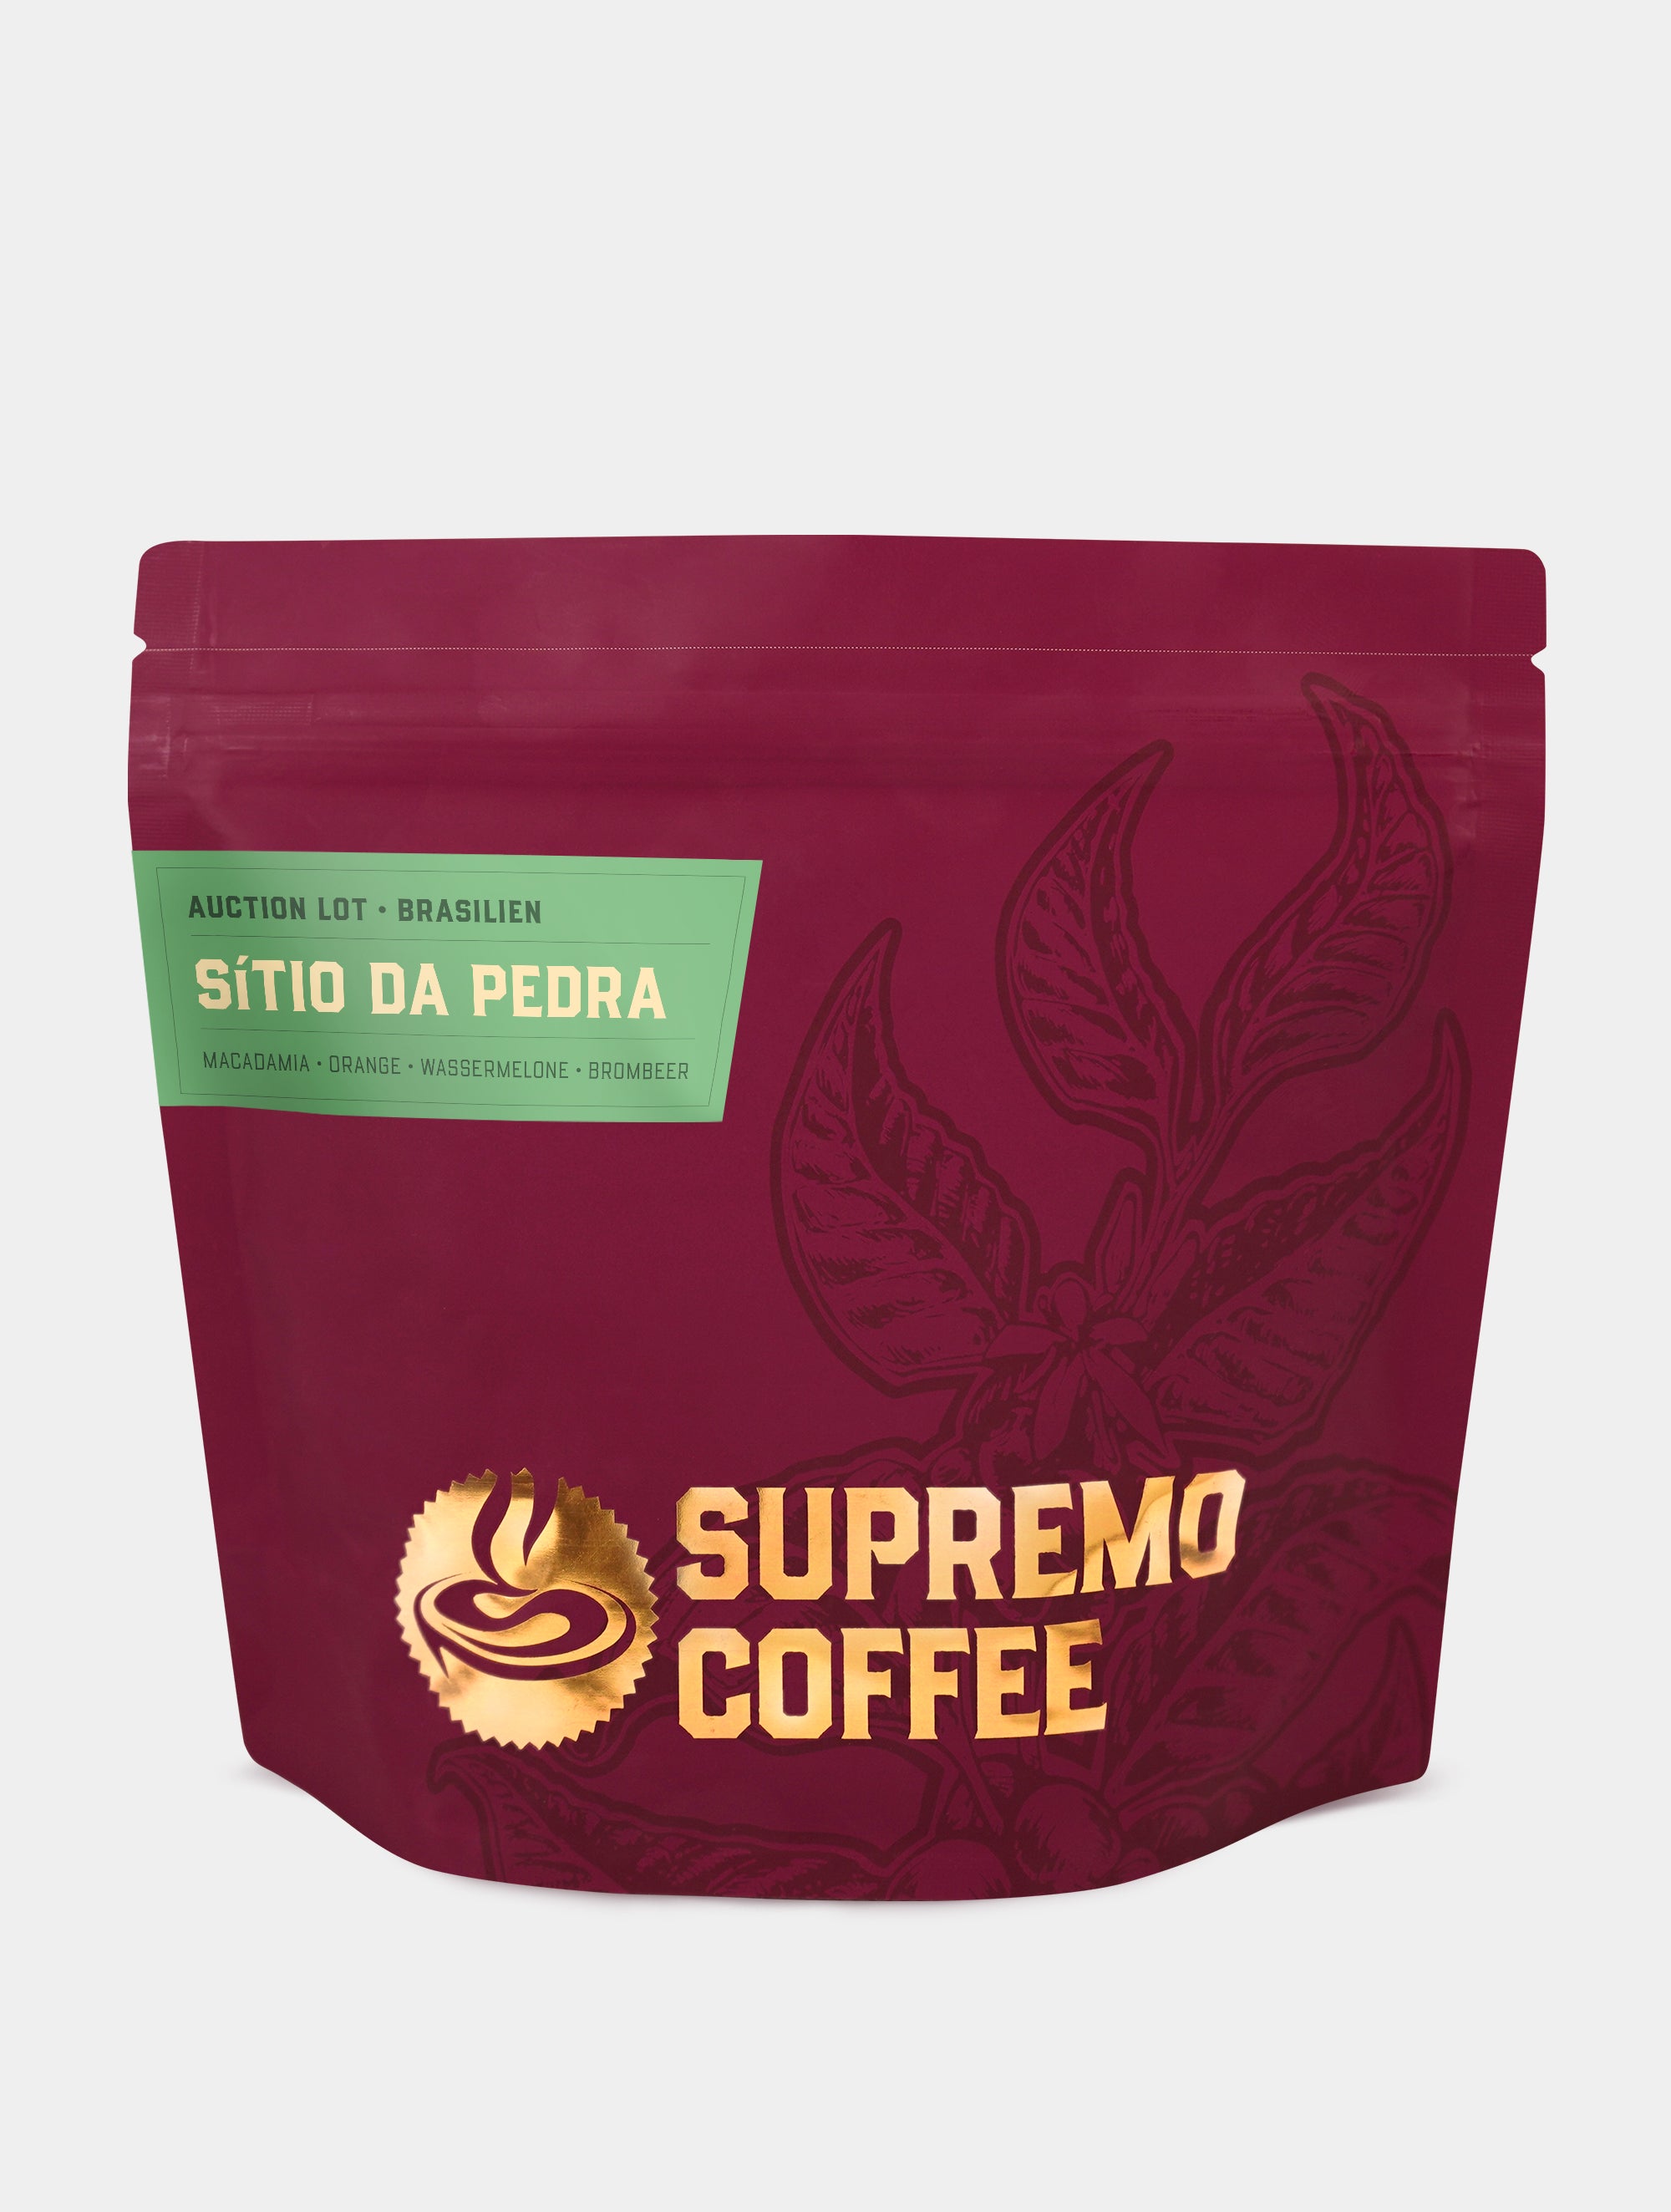 Sítio da Pedra, Brasilien | SUPREMO Coffee